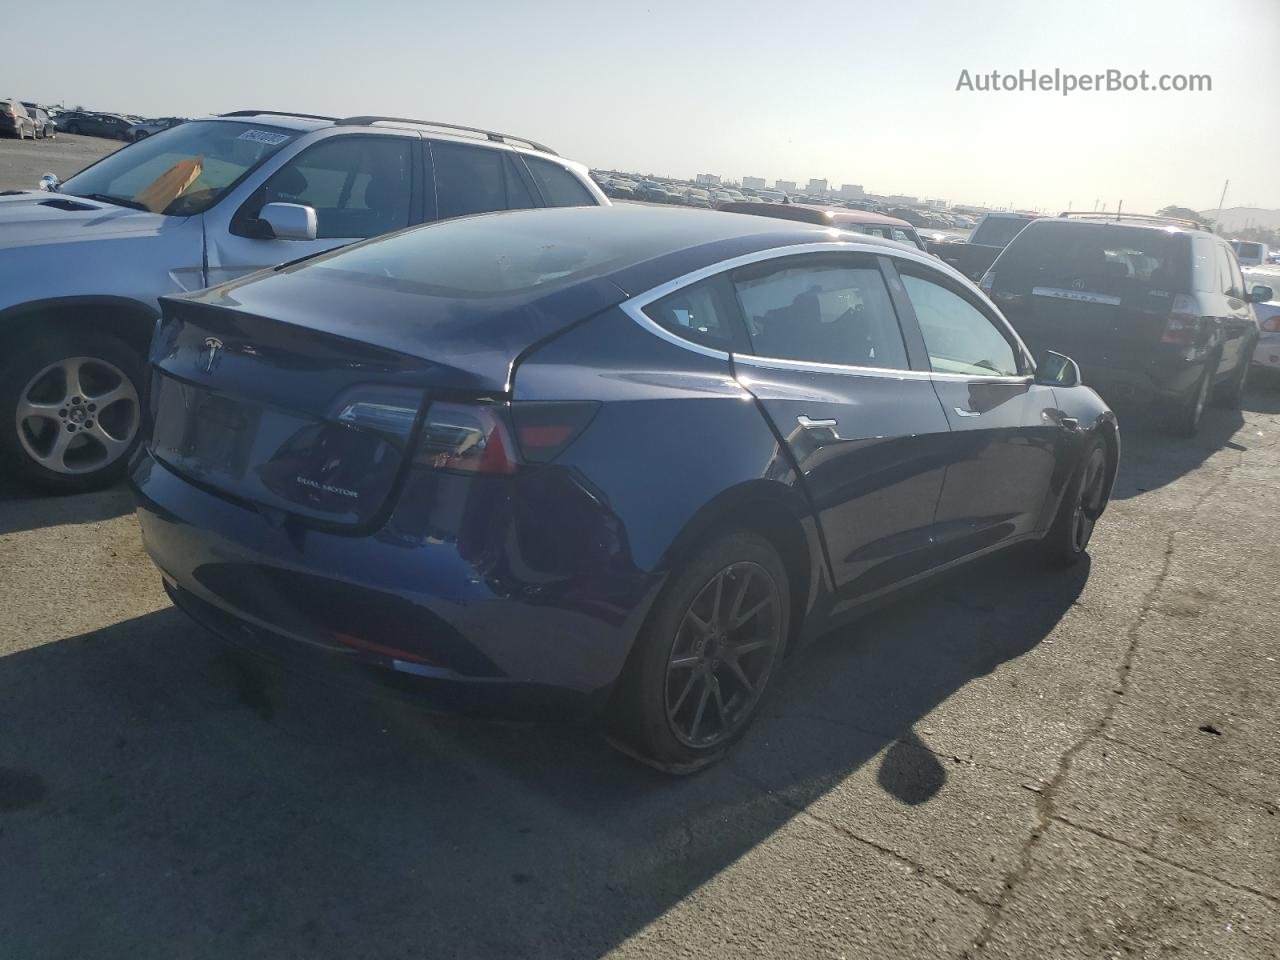 2018 Tesla Model 3  Blue vin: 5YJ3E1EB6JF127675